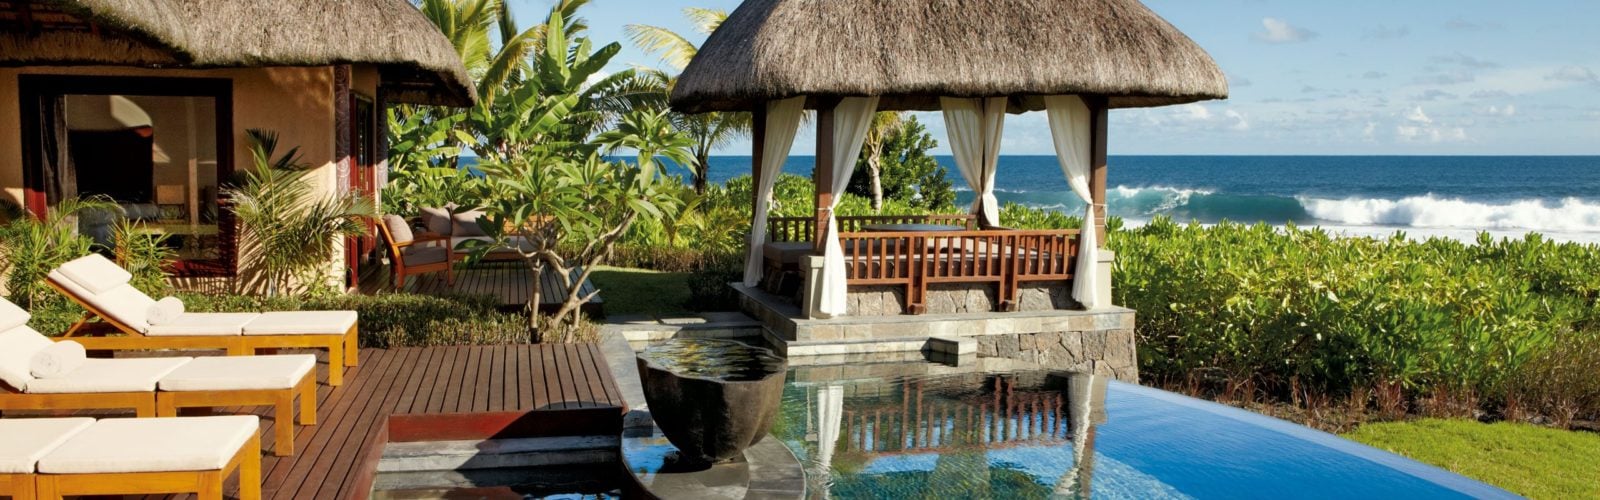 Pool and sundeck, Two bedroom villa, Shanti Maurice, Mauritius